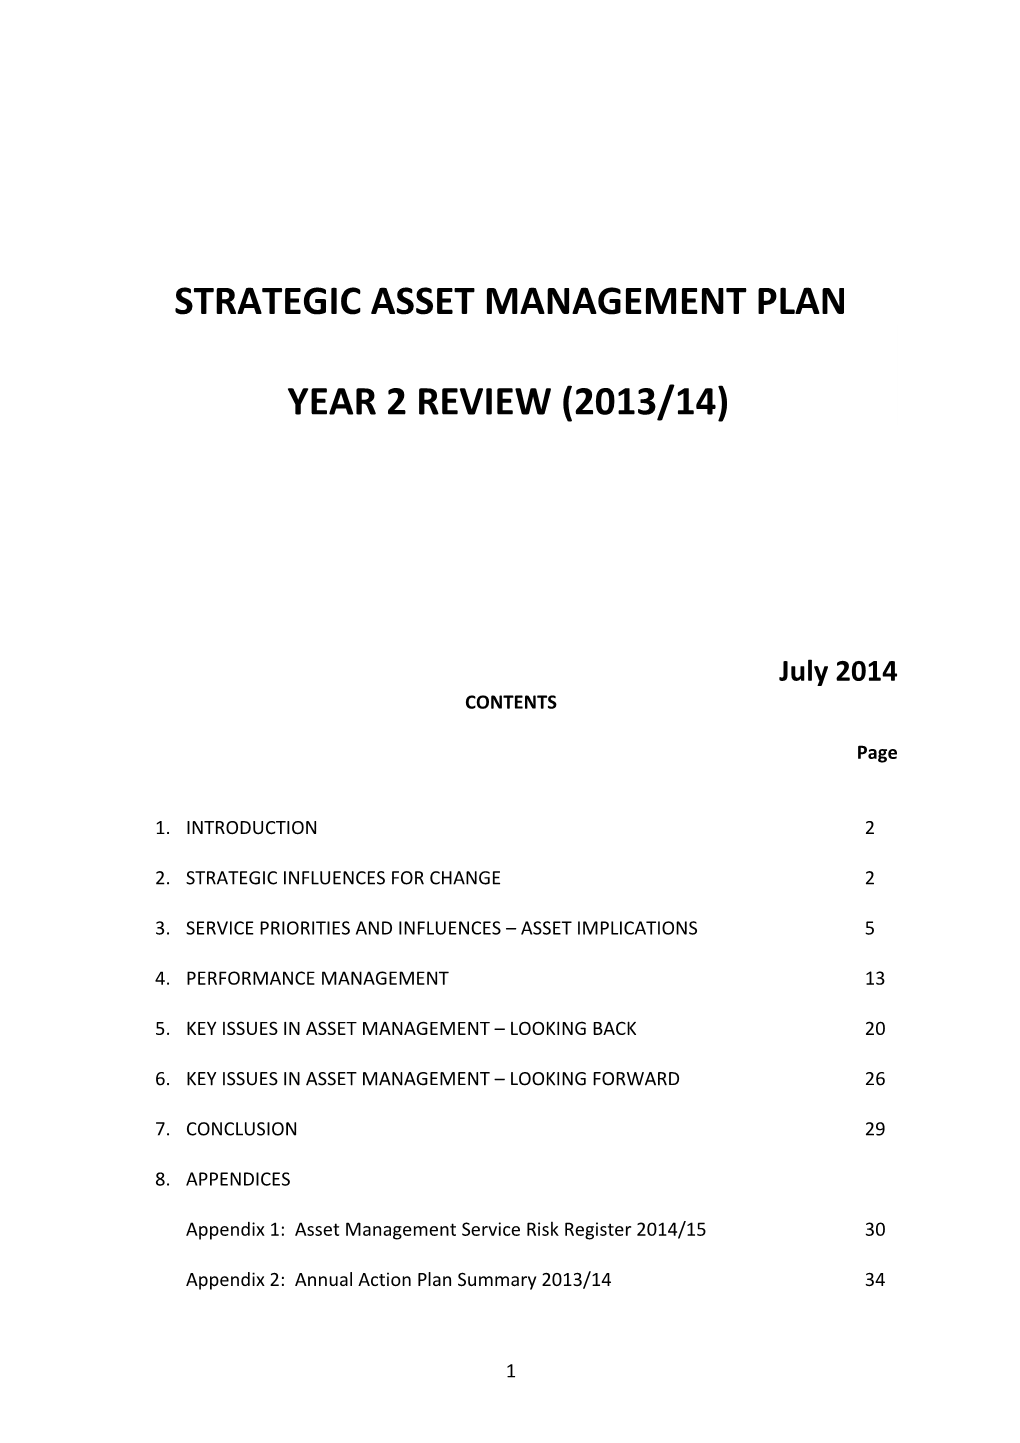 Strategic Asset Management Plan s1